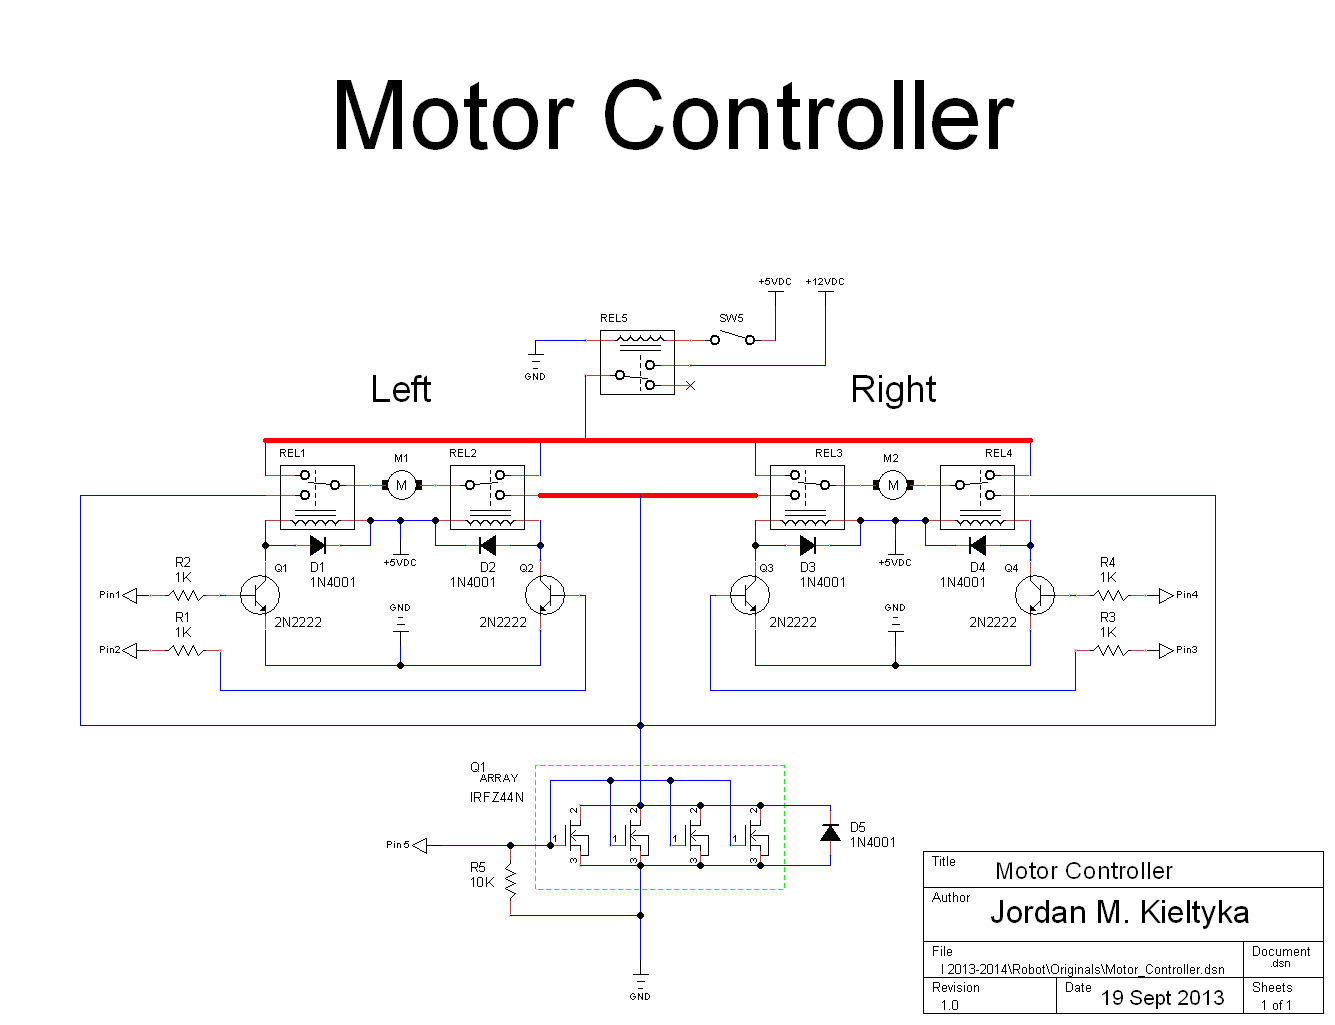 Motor_Controller.png